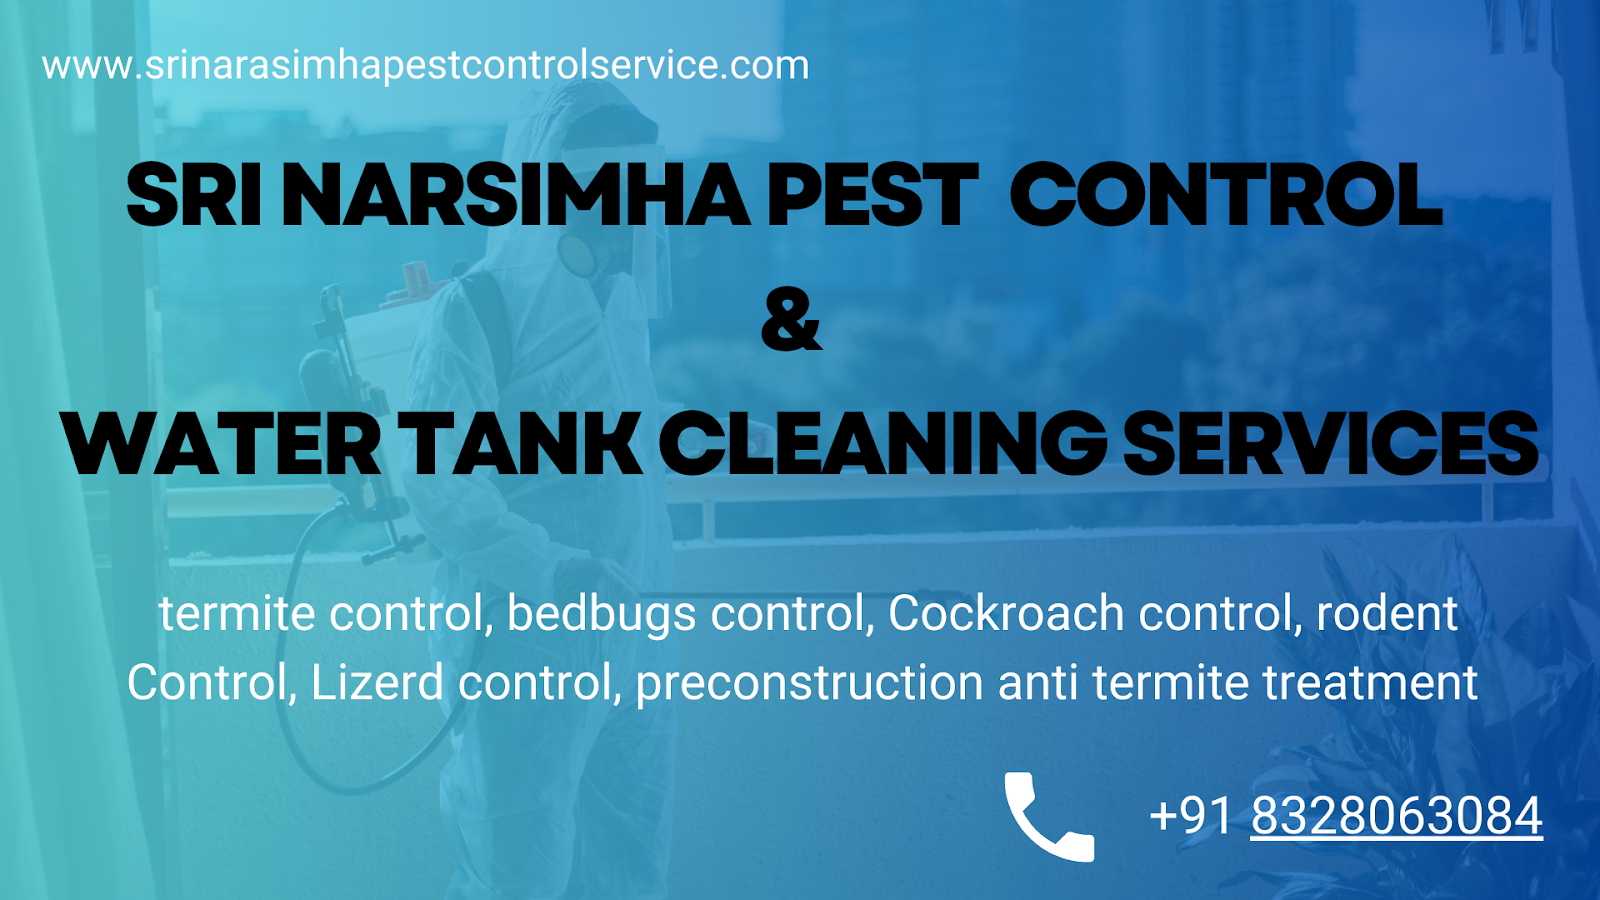 Sri Narasimha Pest Control